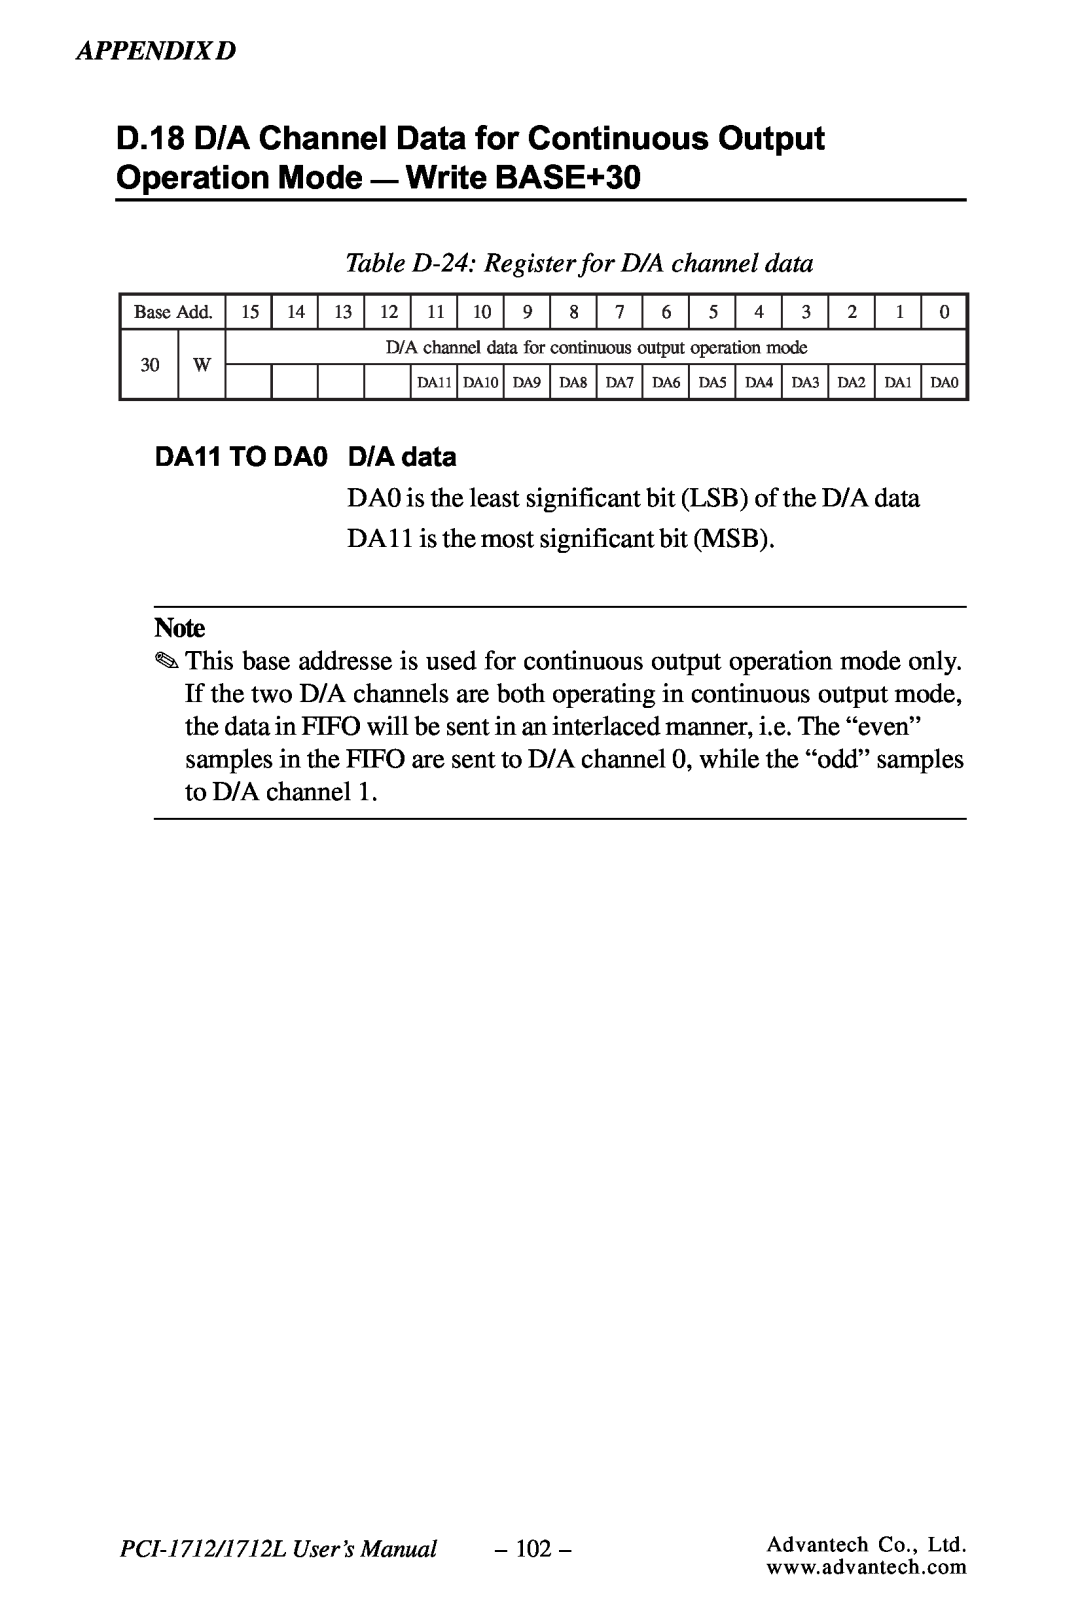 Konica Minolta PCI-1712L user manual Table D-24 Register for D/A channel data, DA11 TO DA0 D/A data 